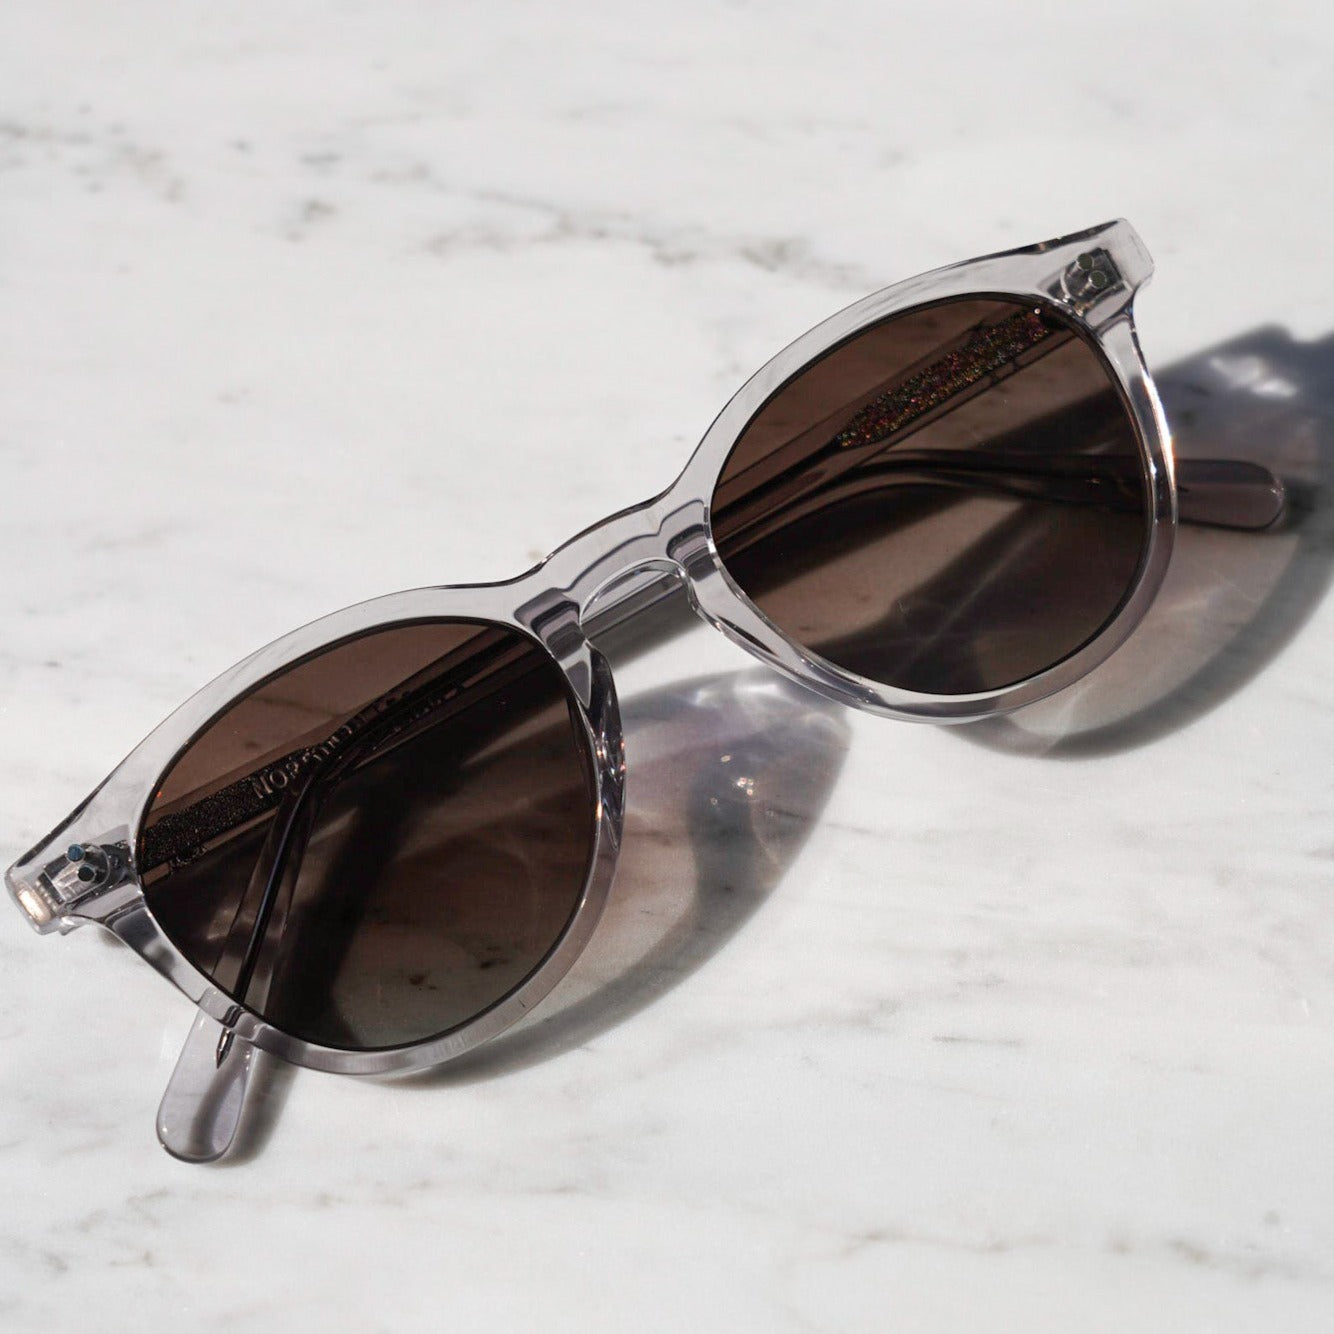 Explorer sunglasses - Transparent brown